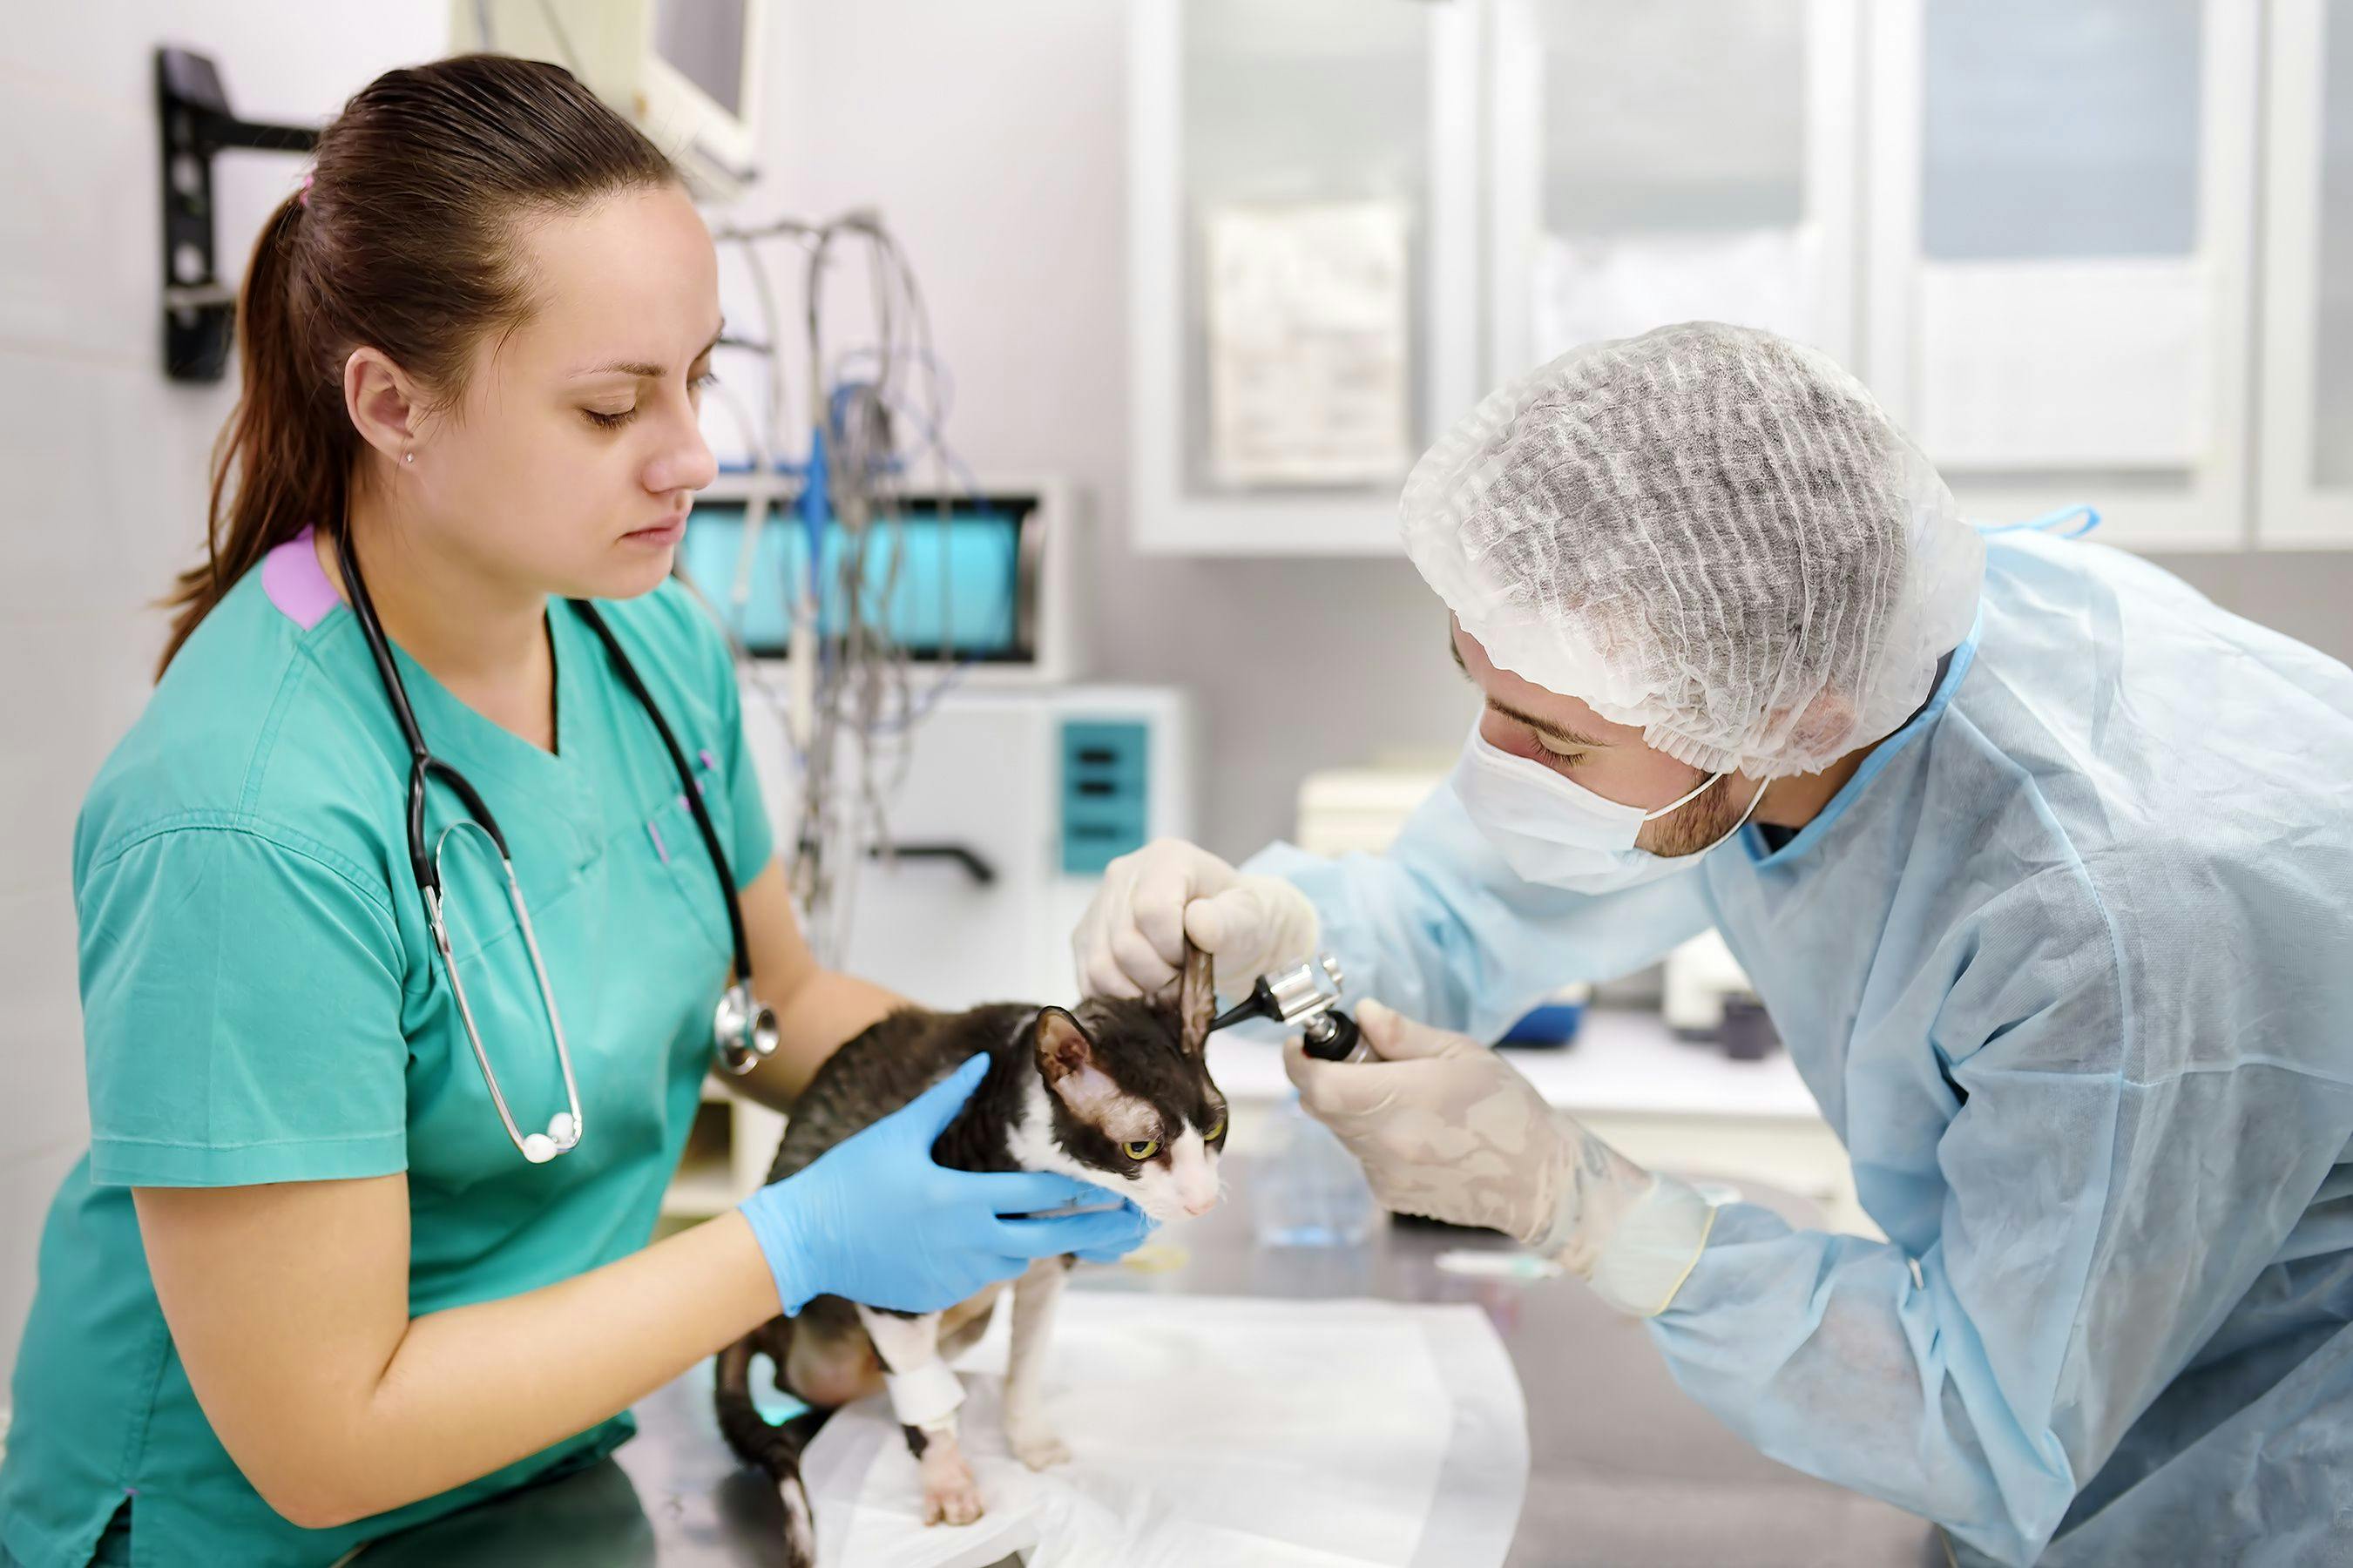 Veterinary technician scholarship recipients announced 